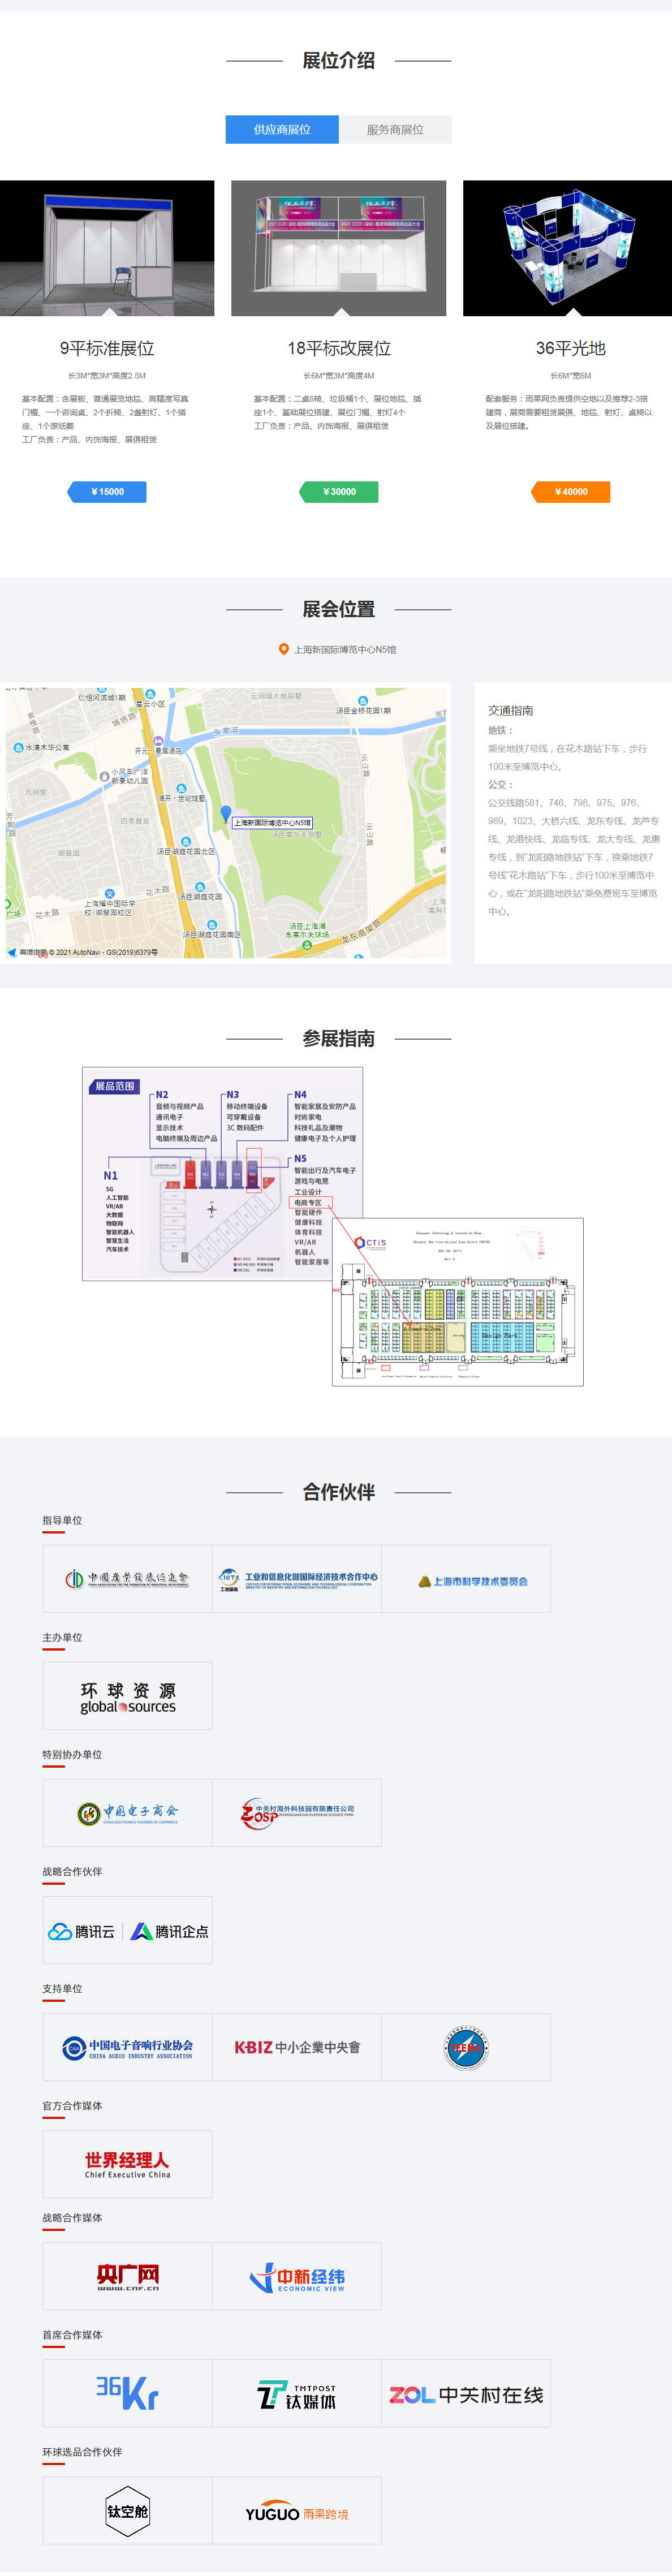 2021 CTIS X CCEE 上海跨境电商选品大会